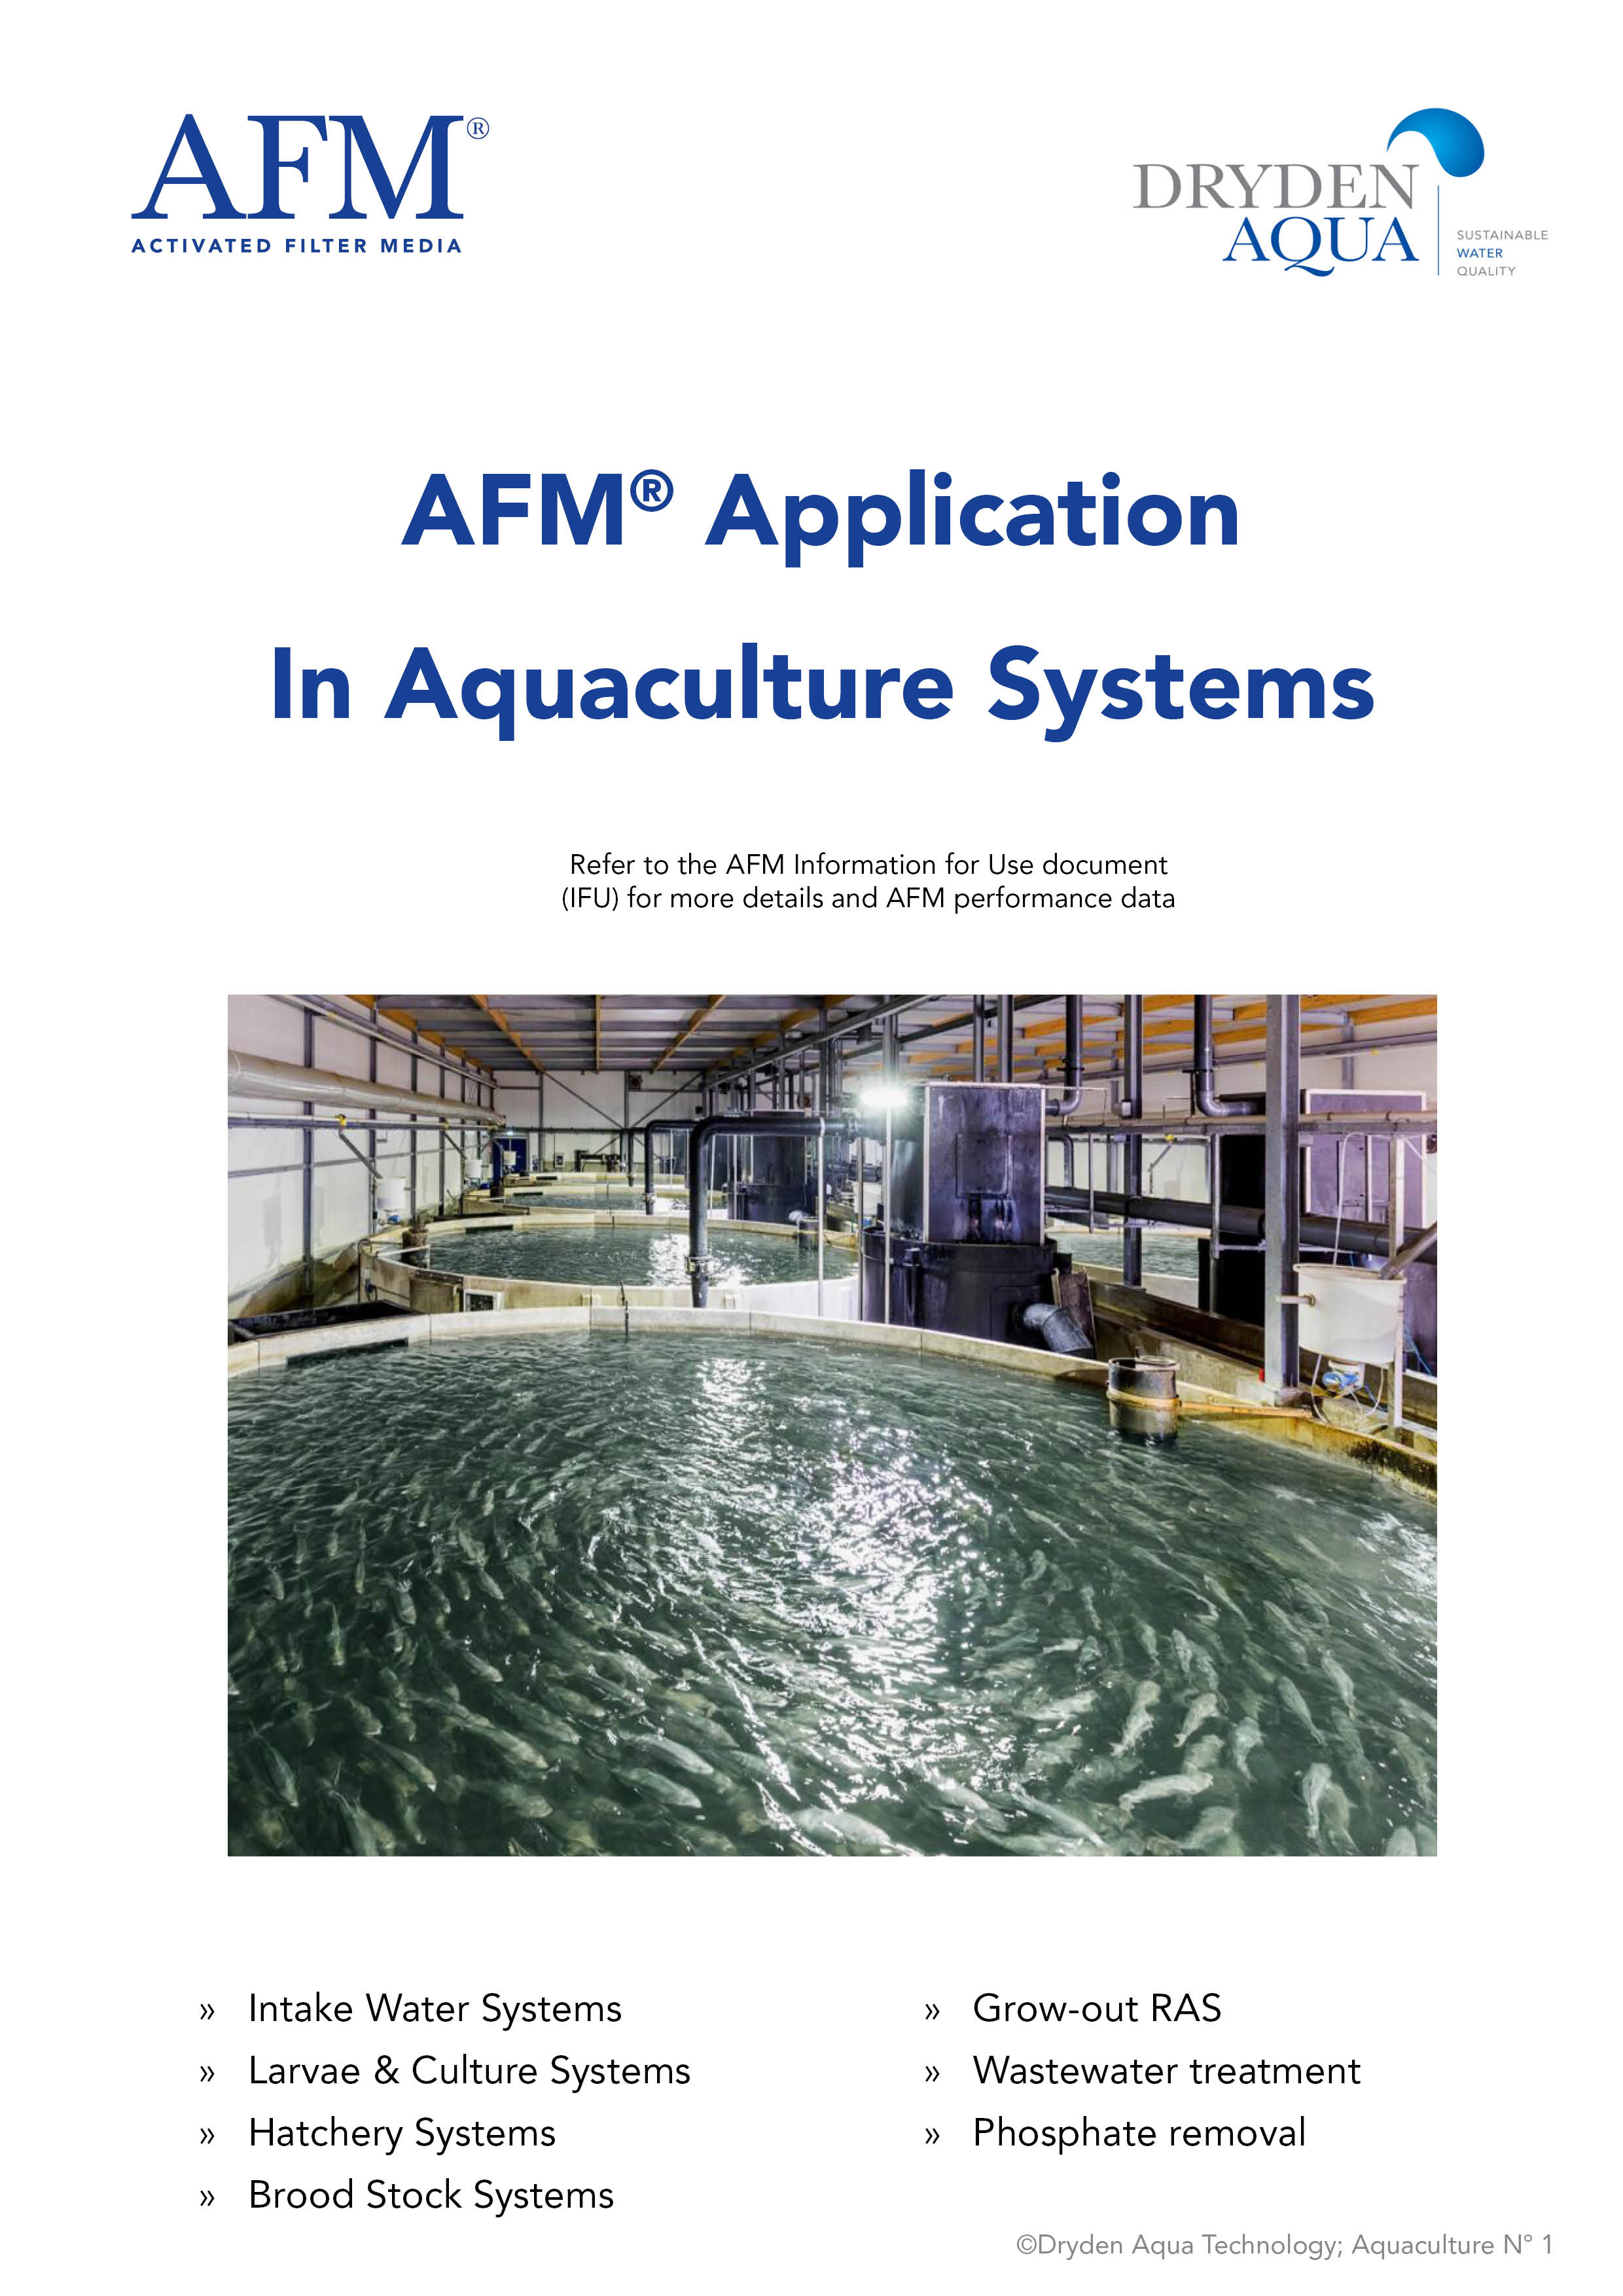 AFM Application in Aquaculture systems (IFU)